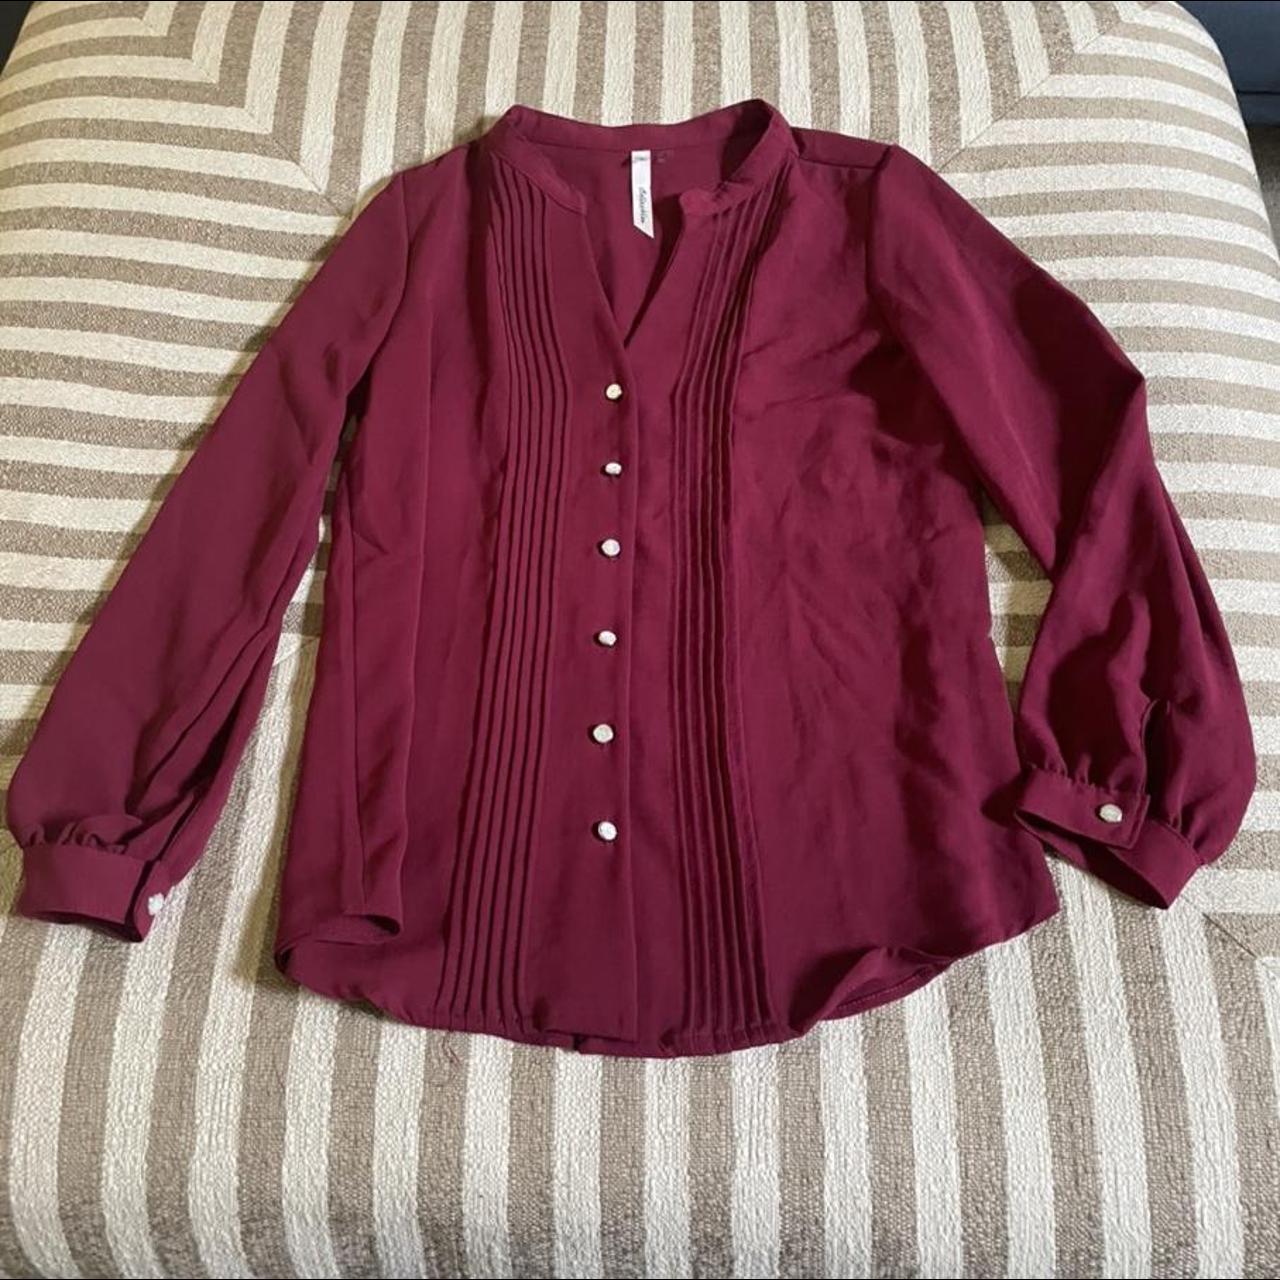 burgundy work blouse. New York collection, long... - Depop